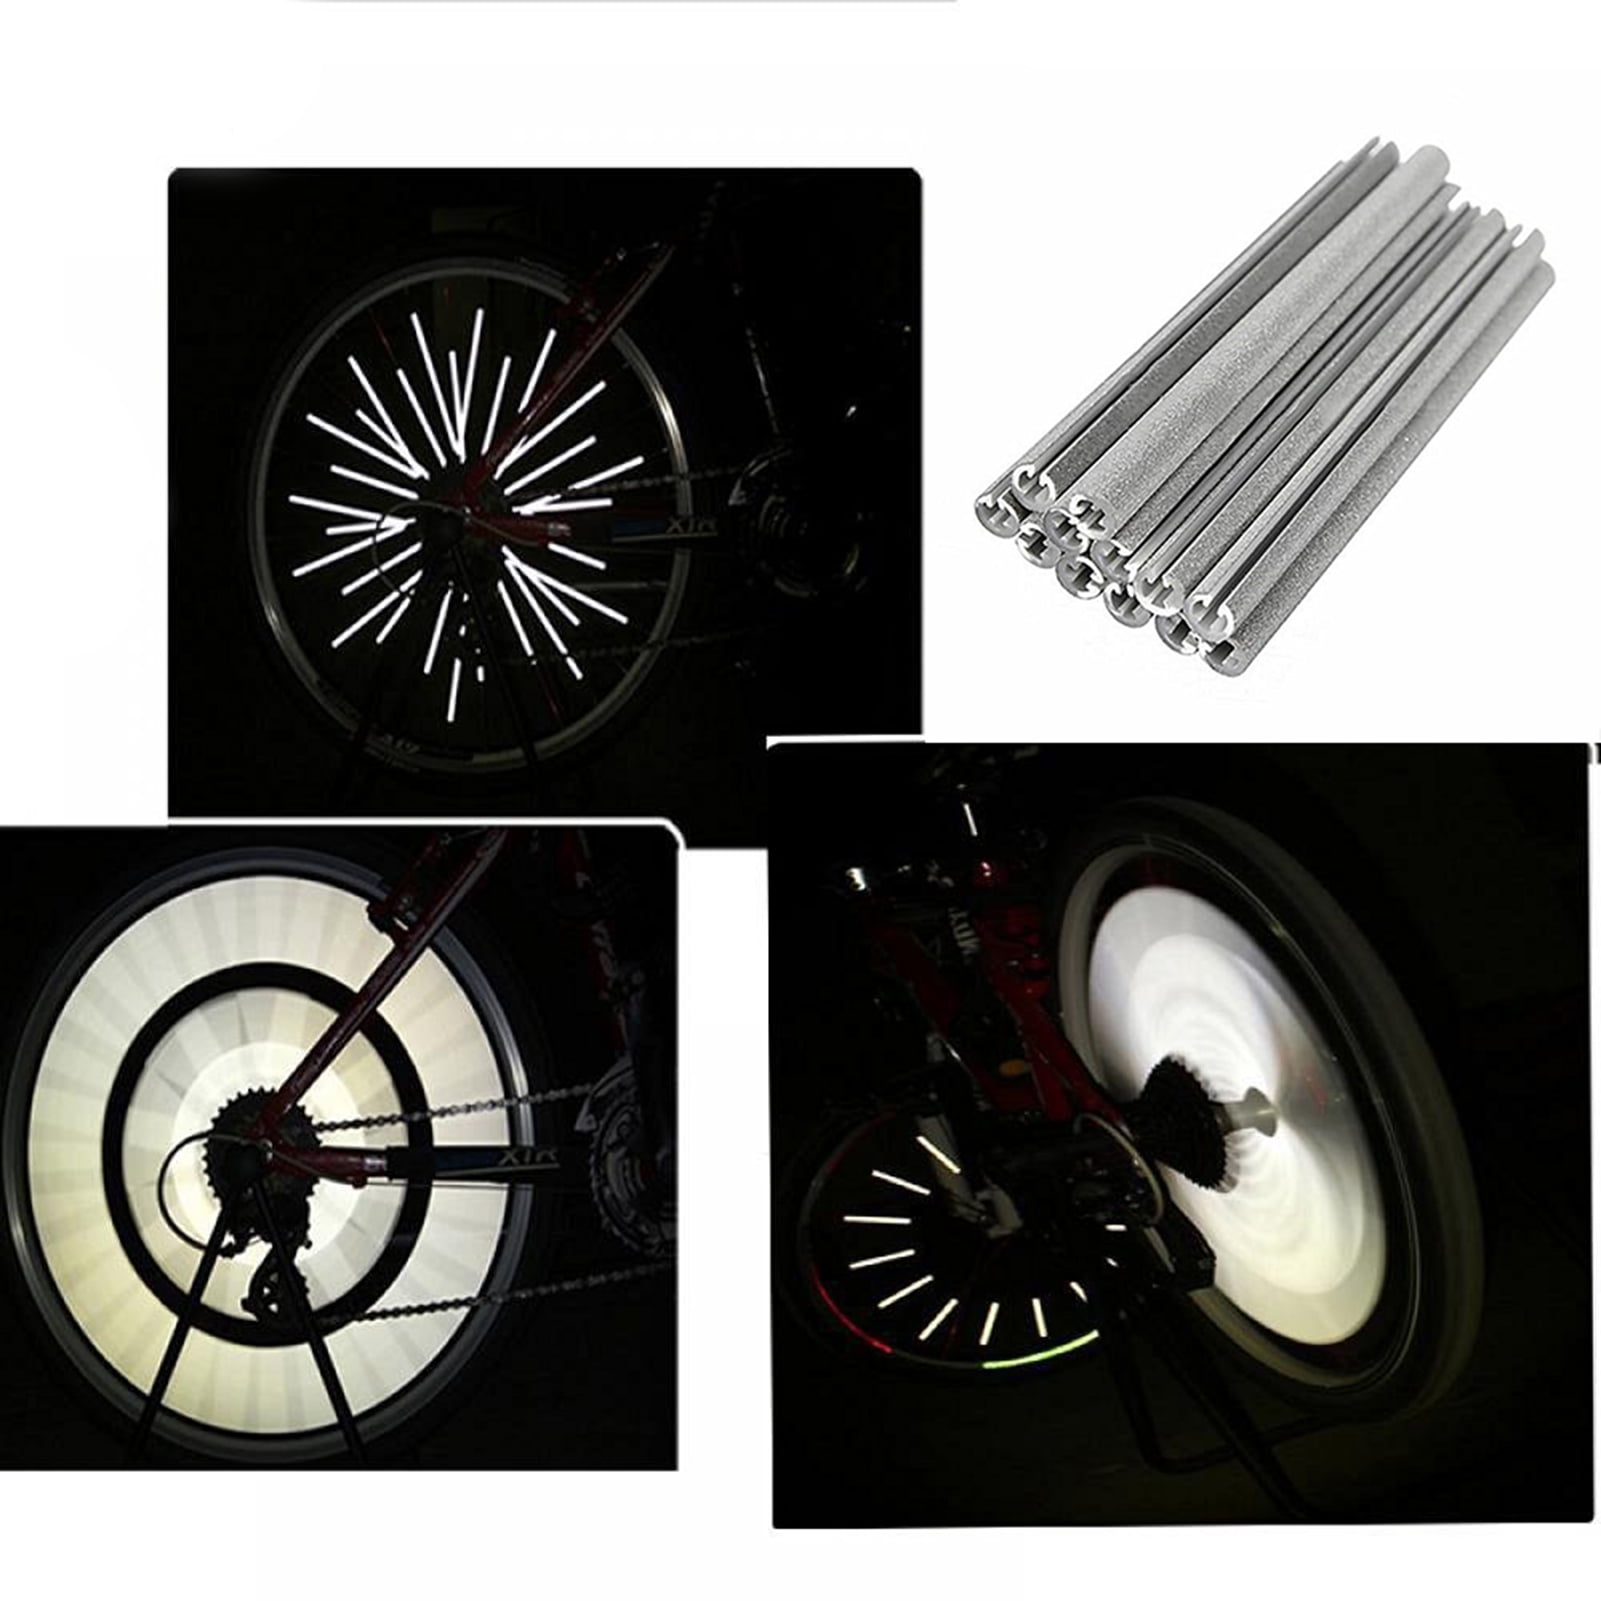 Clip Safety Assurance Wheel Reflective Warning Light Bicycle Spoke Reflector 